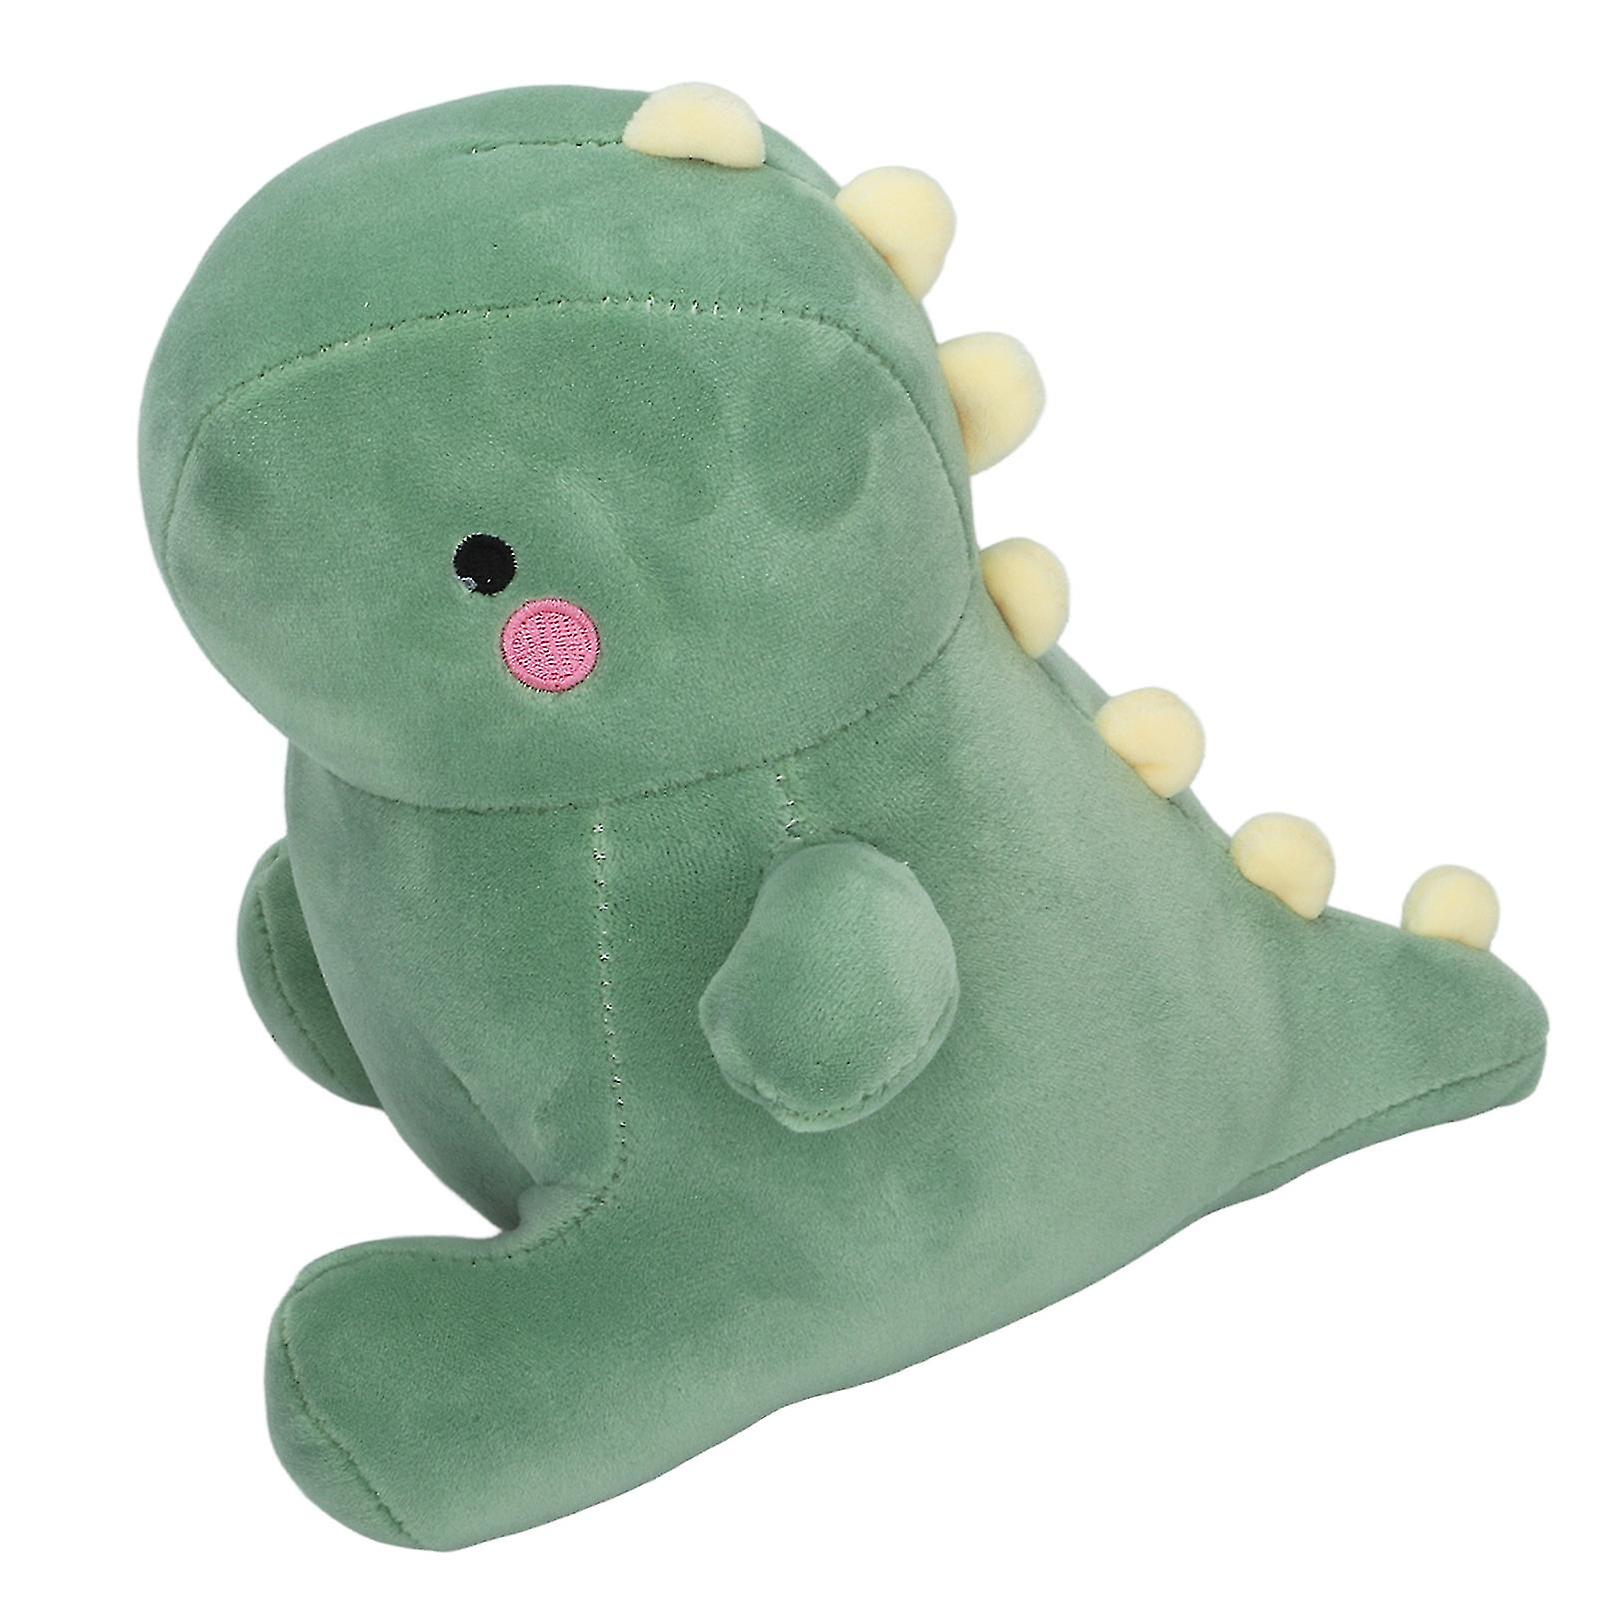 Cute Dinosaur Plush Toy Safe Soft Stuffed Animal Plush Toy Doll for Kids Girls Boys Birthday Gifts Green 25cm / 9.8in